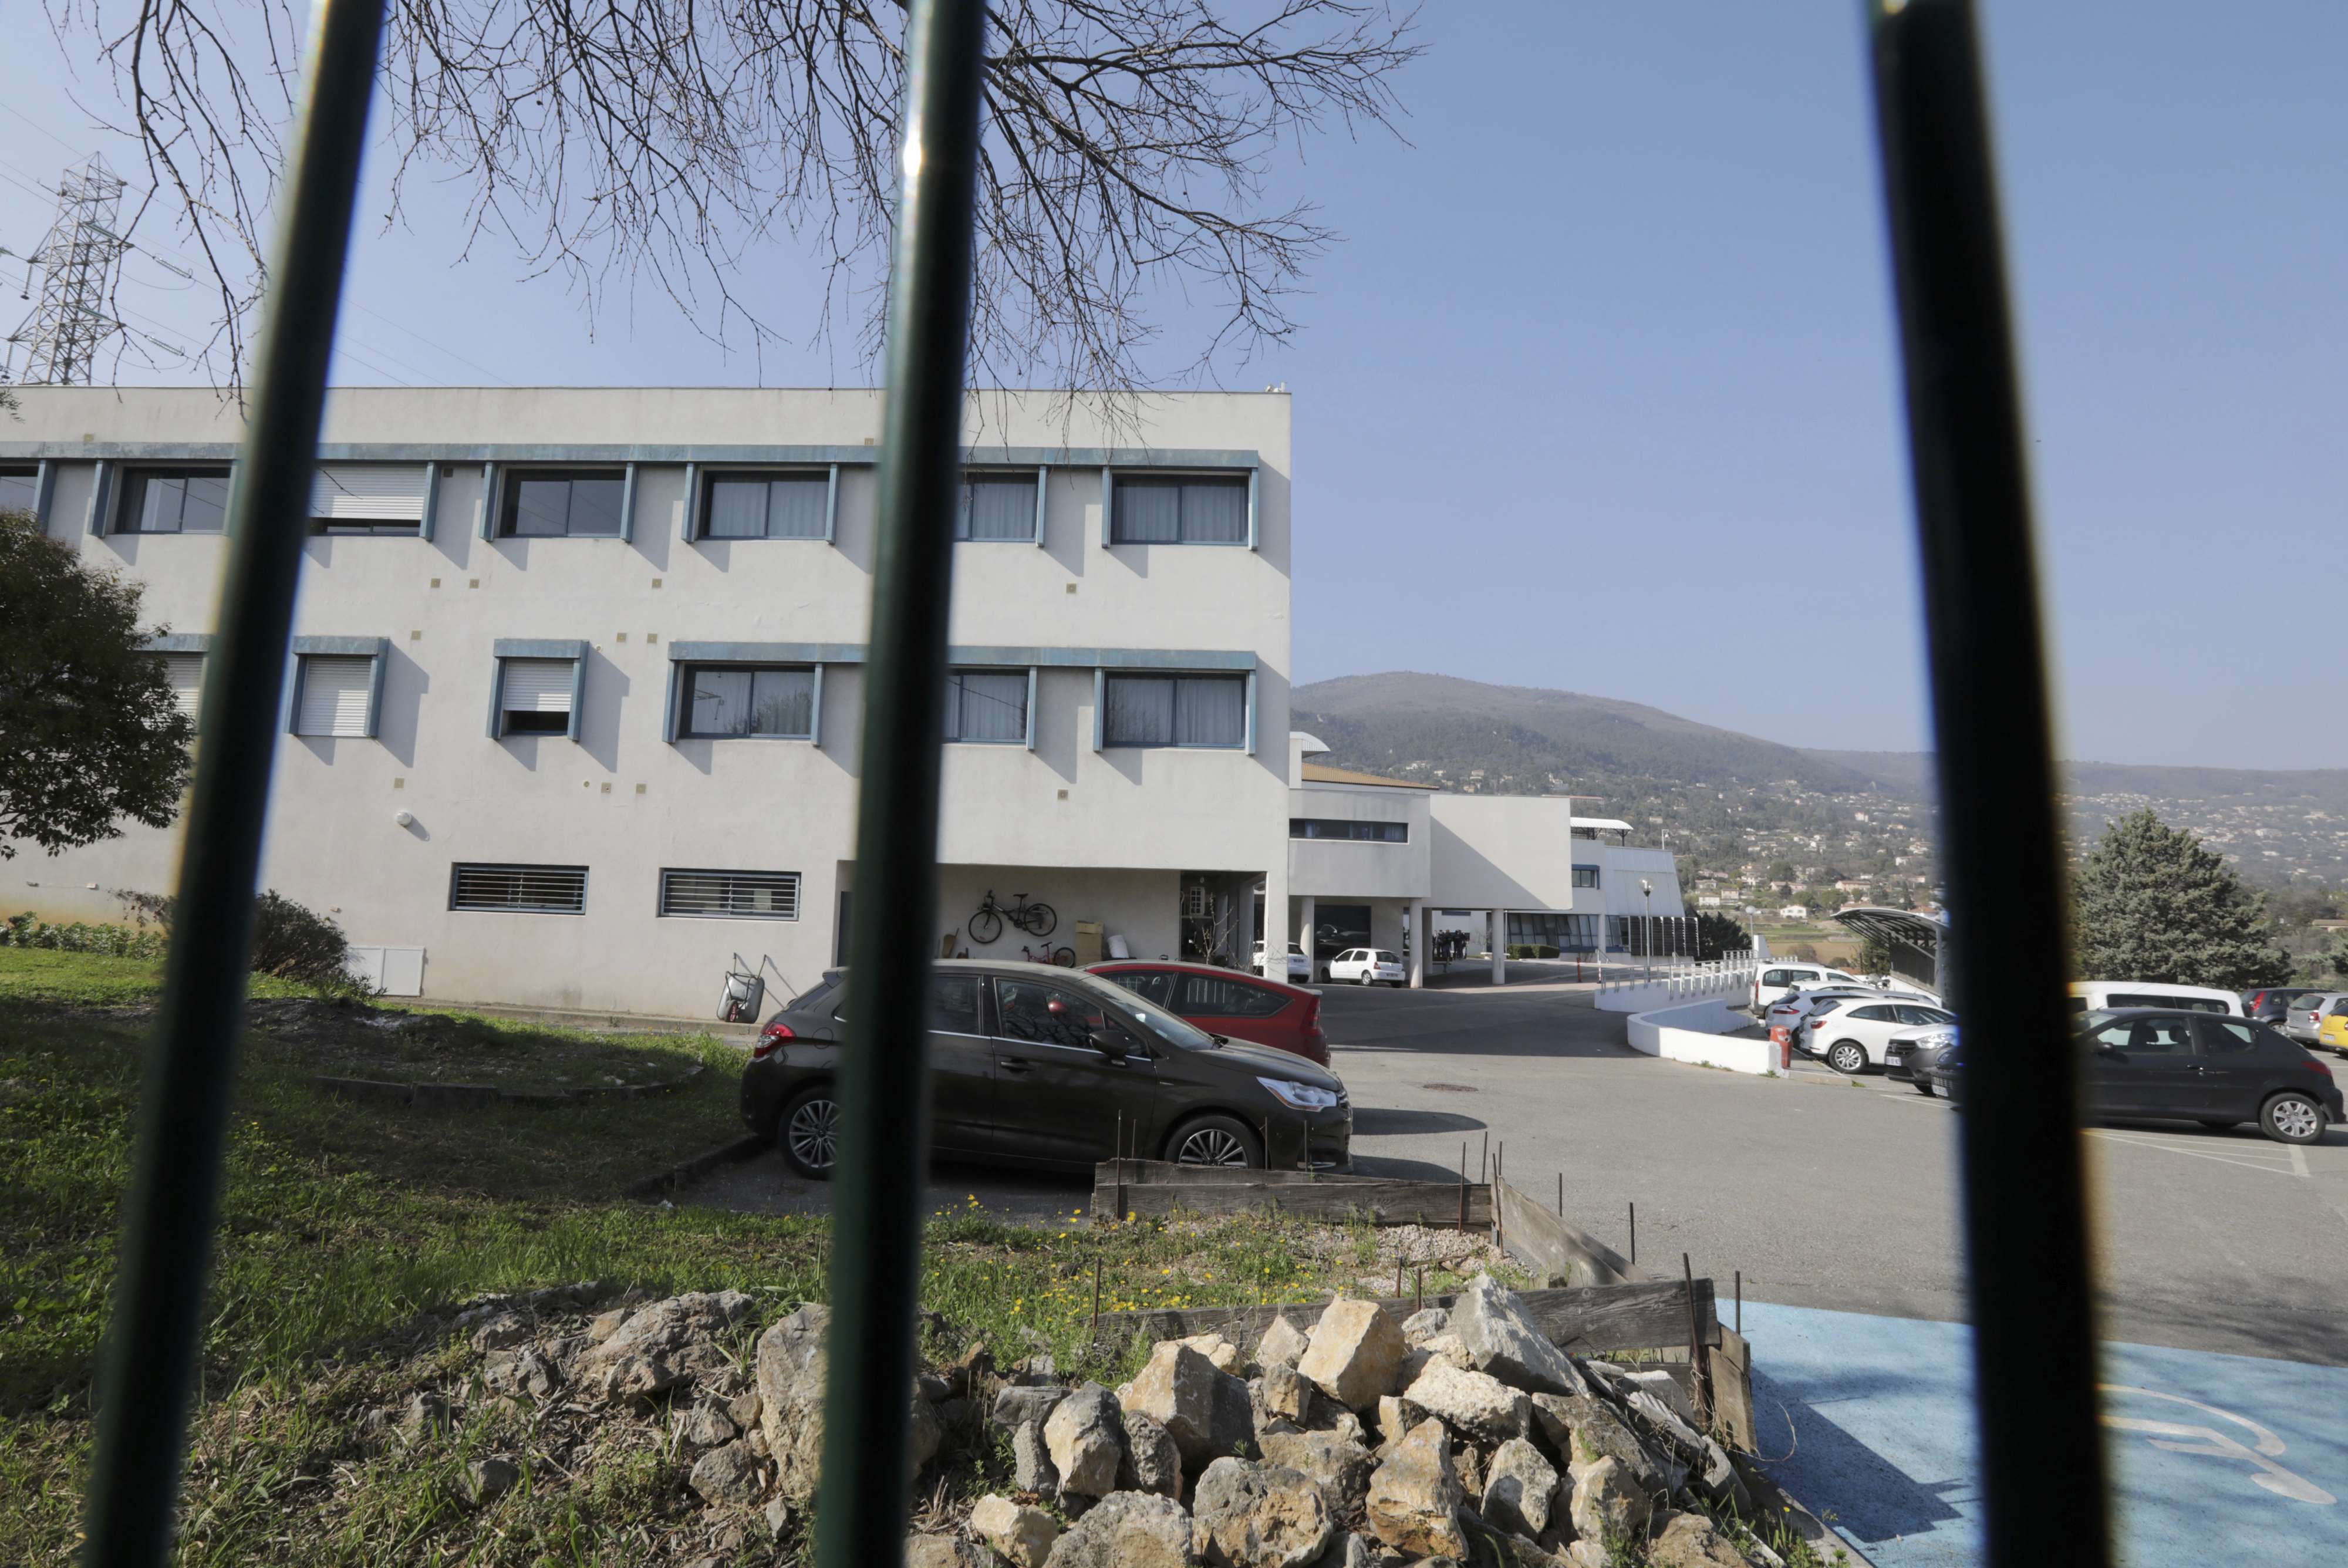 Vista frontal de la escuela donde se registró un tiroteo en Grasse, Francia (Reuters)